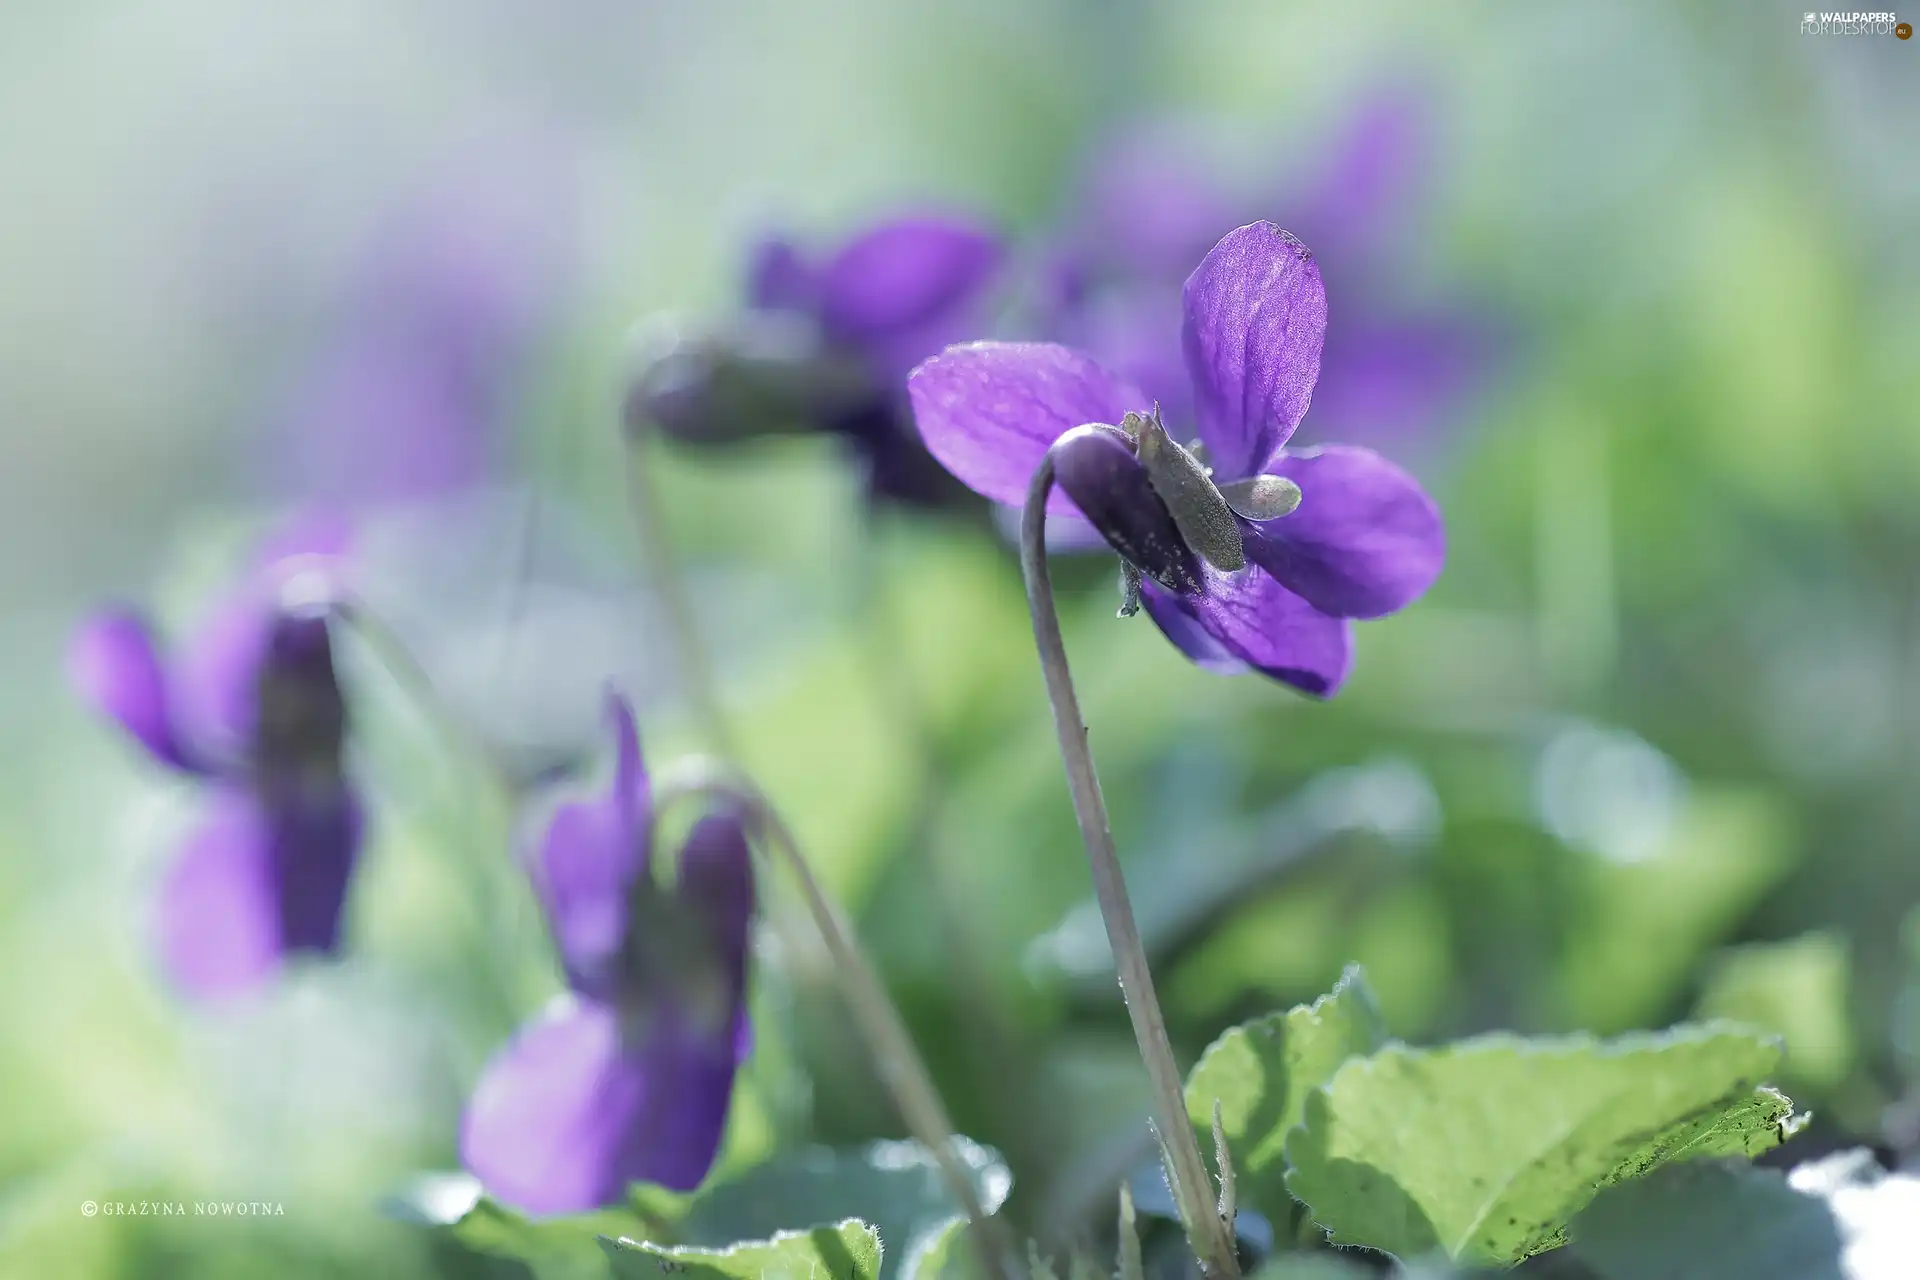 Viola odorata, Purple Flower